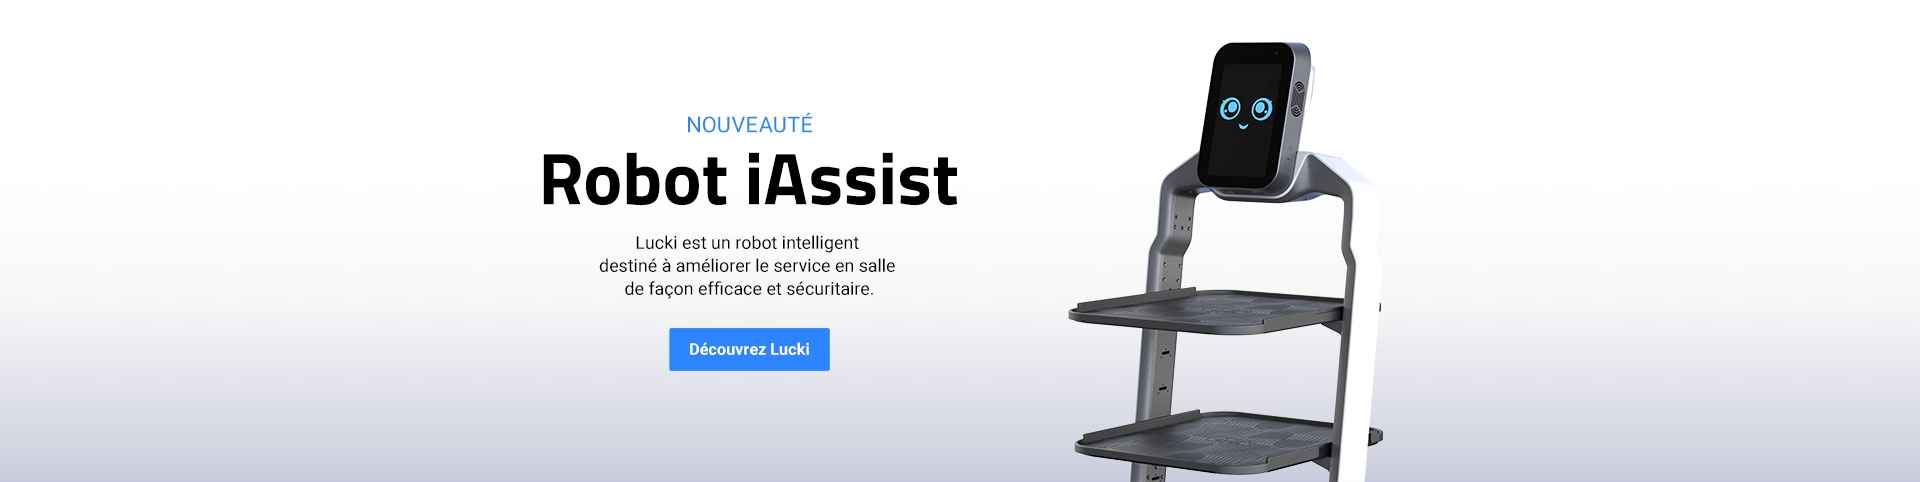 Robot de service intelligent iAssist